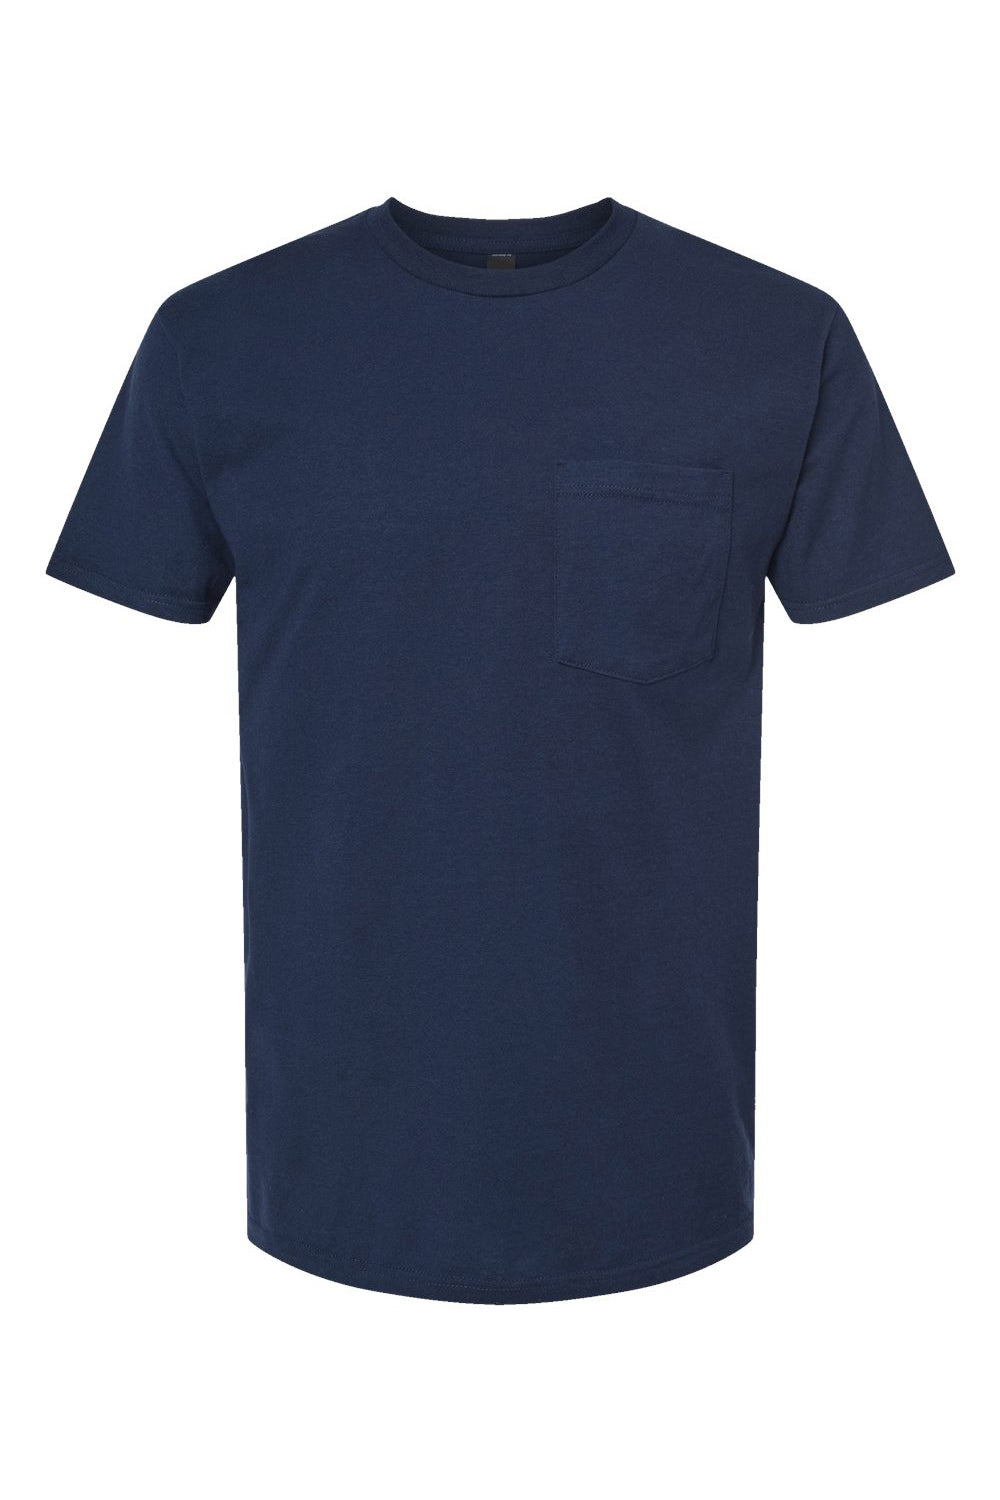 Tultex 293 Mens Jersey Short Sleeve Crewneck T-Shirt w/ Pocket Navy Blue Flat Front